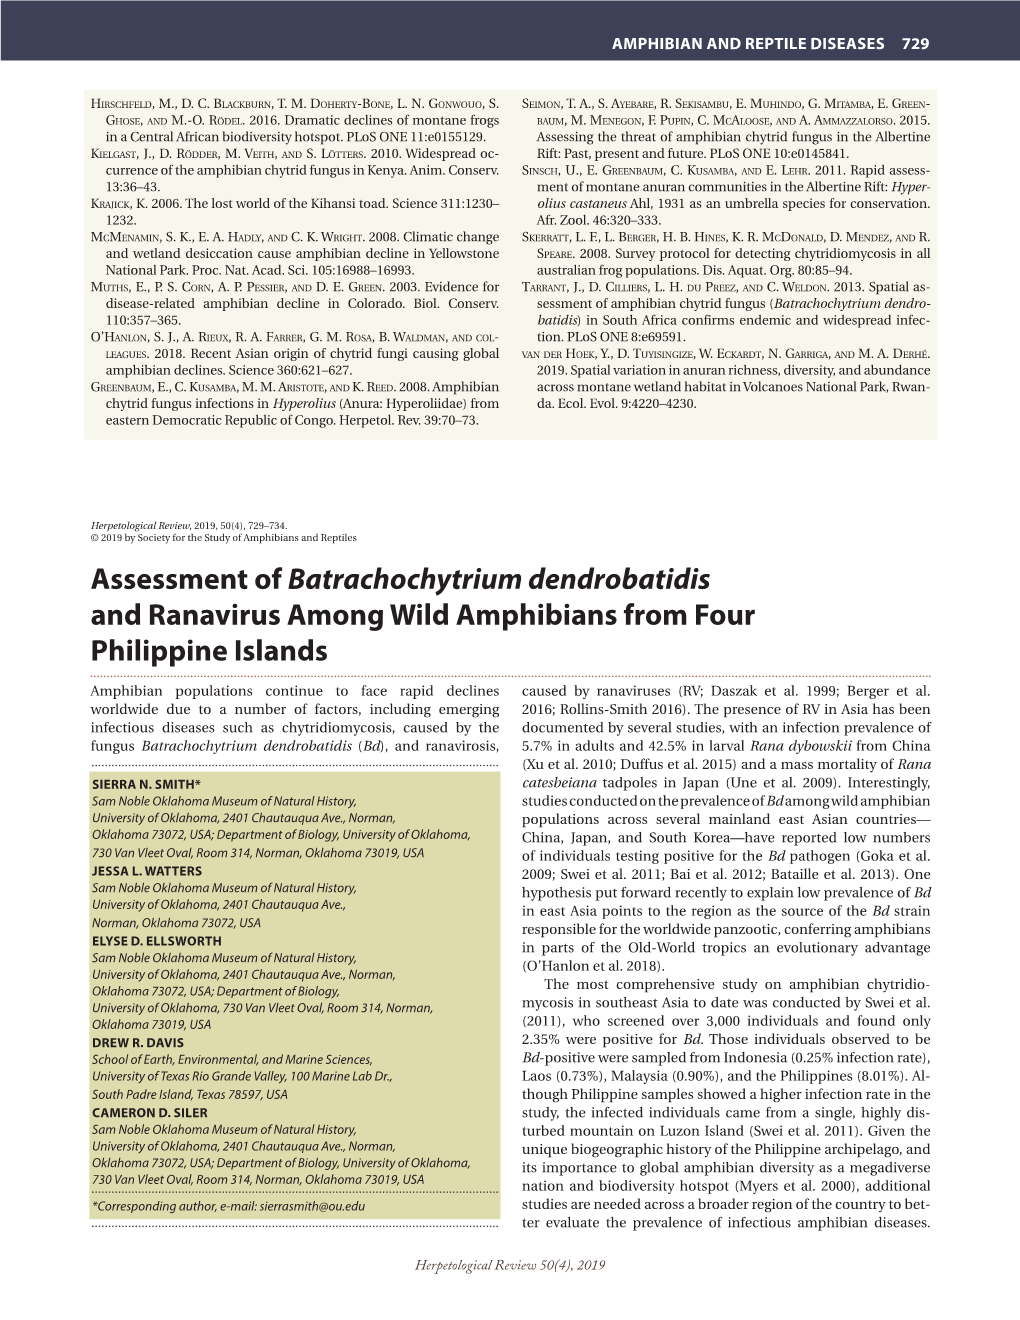 Assessment of Batrachochytrium Dendrobatidis and Ranavirus Among Wild Amphibians from Four Philippine Islands